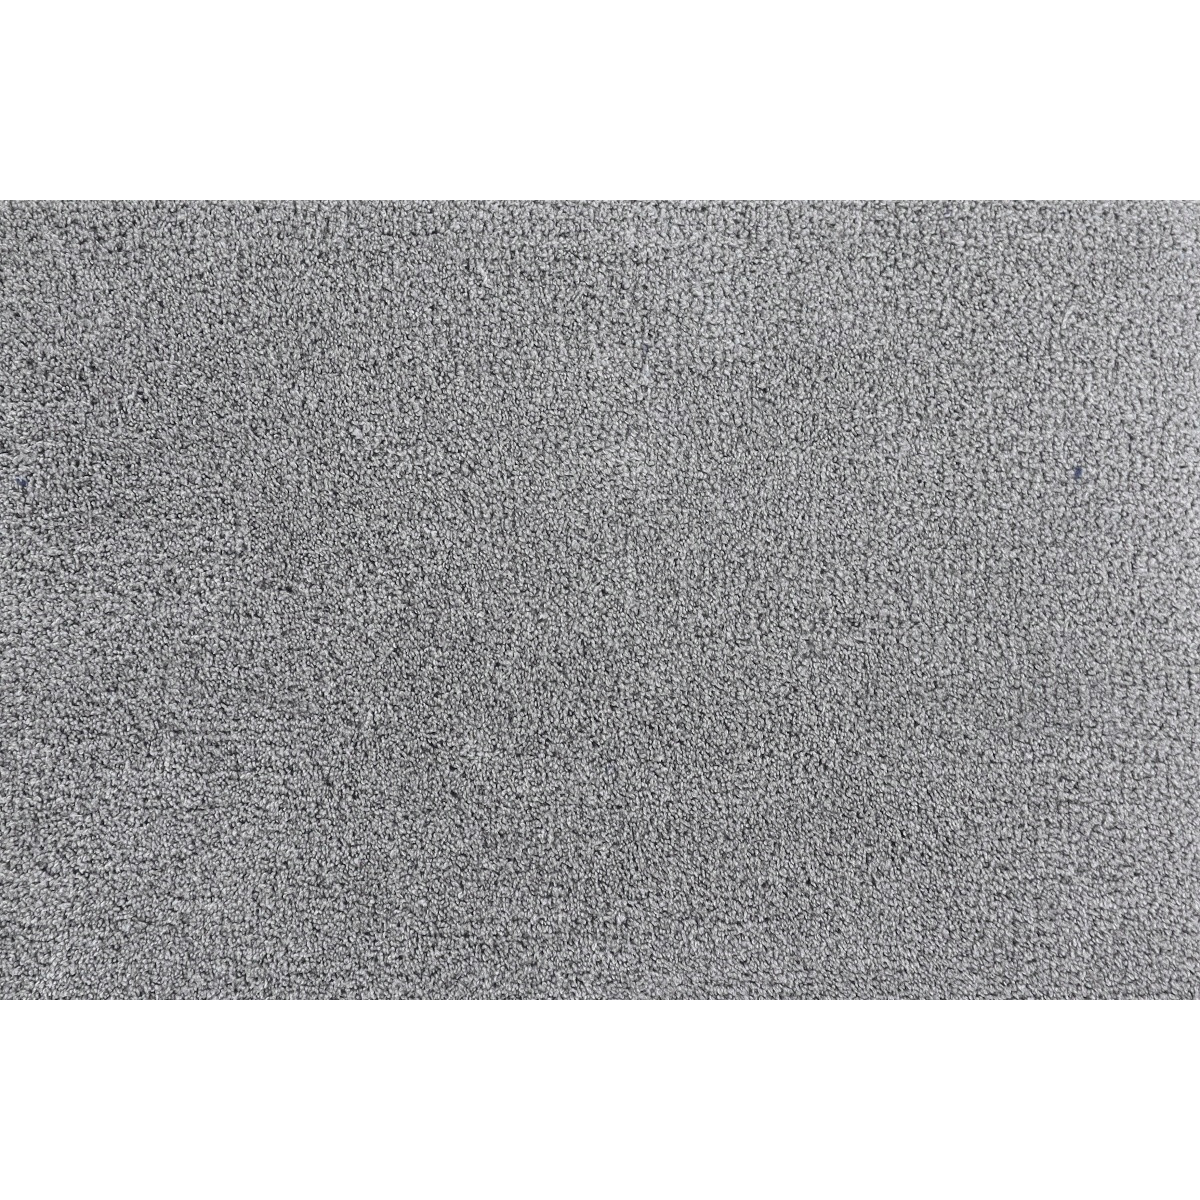 Metrážny koberec Elizabet 274 sv. šedá